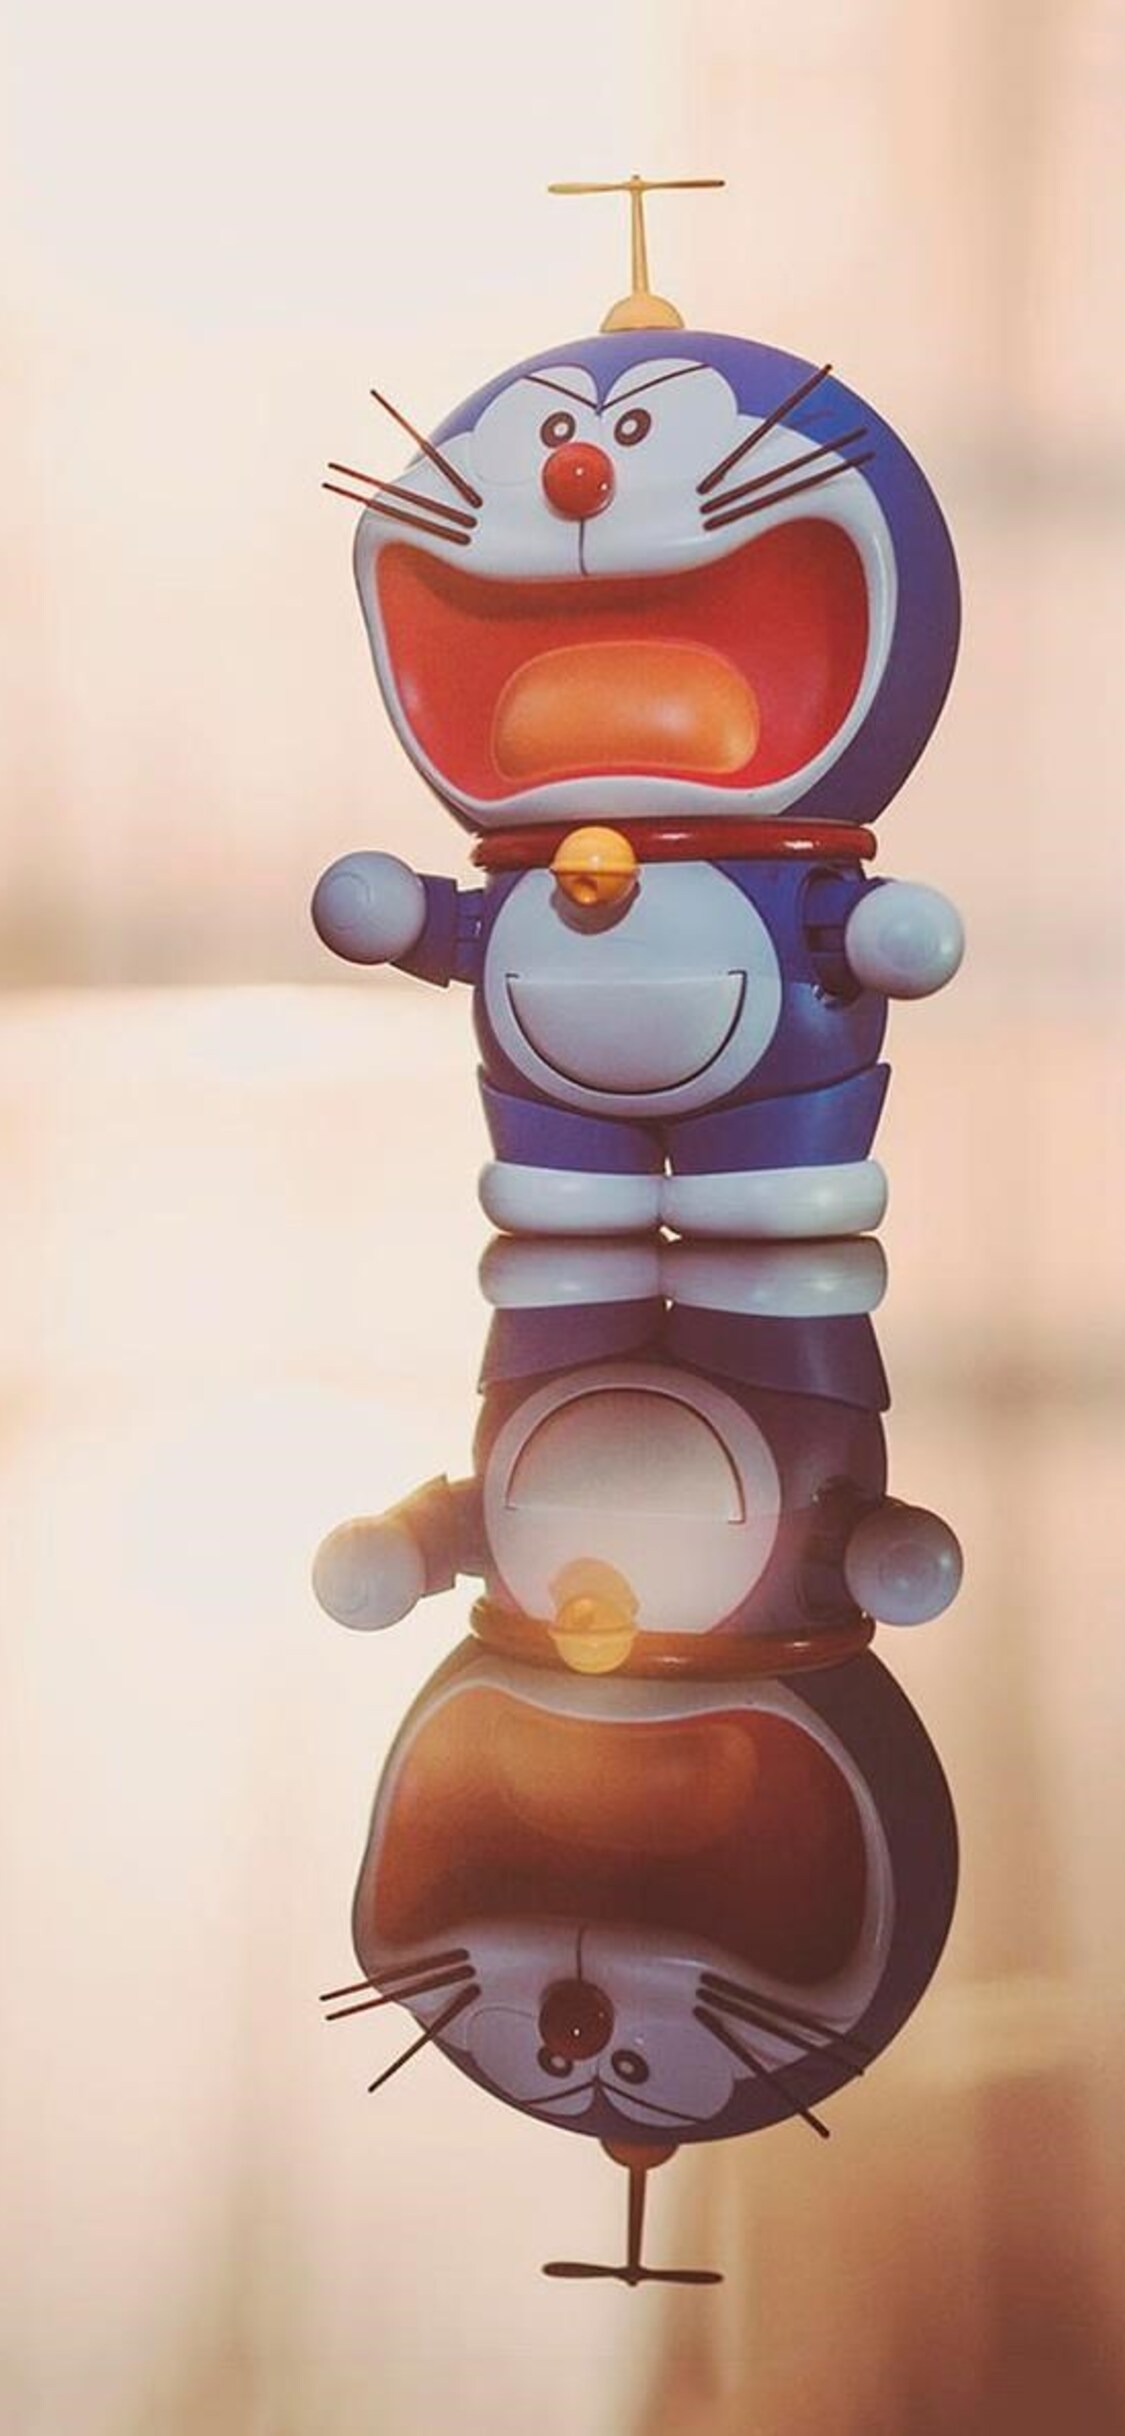 Hình nền iphone Doraemon